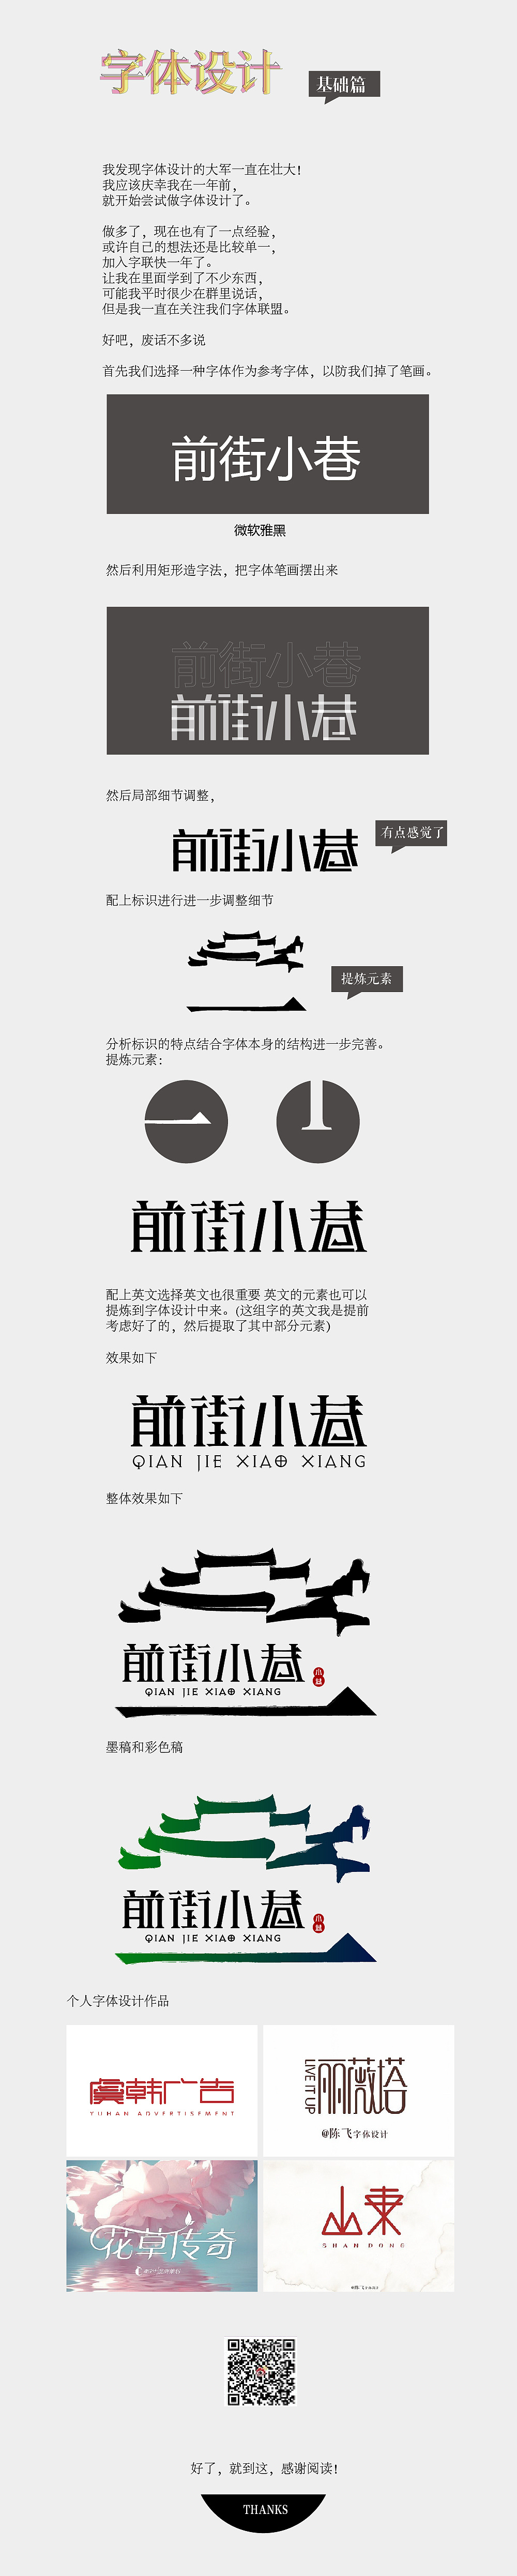 Chen Fei Font Design "Font Design - Basics" Tutorial